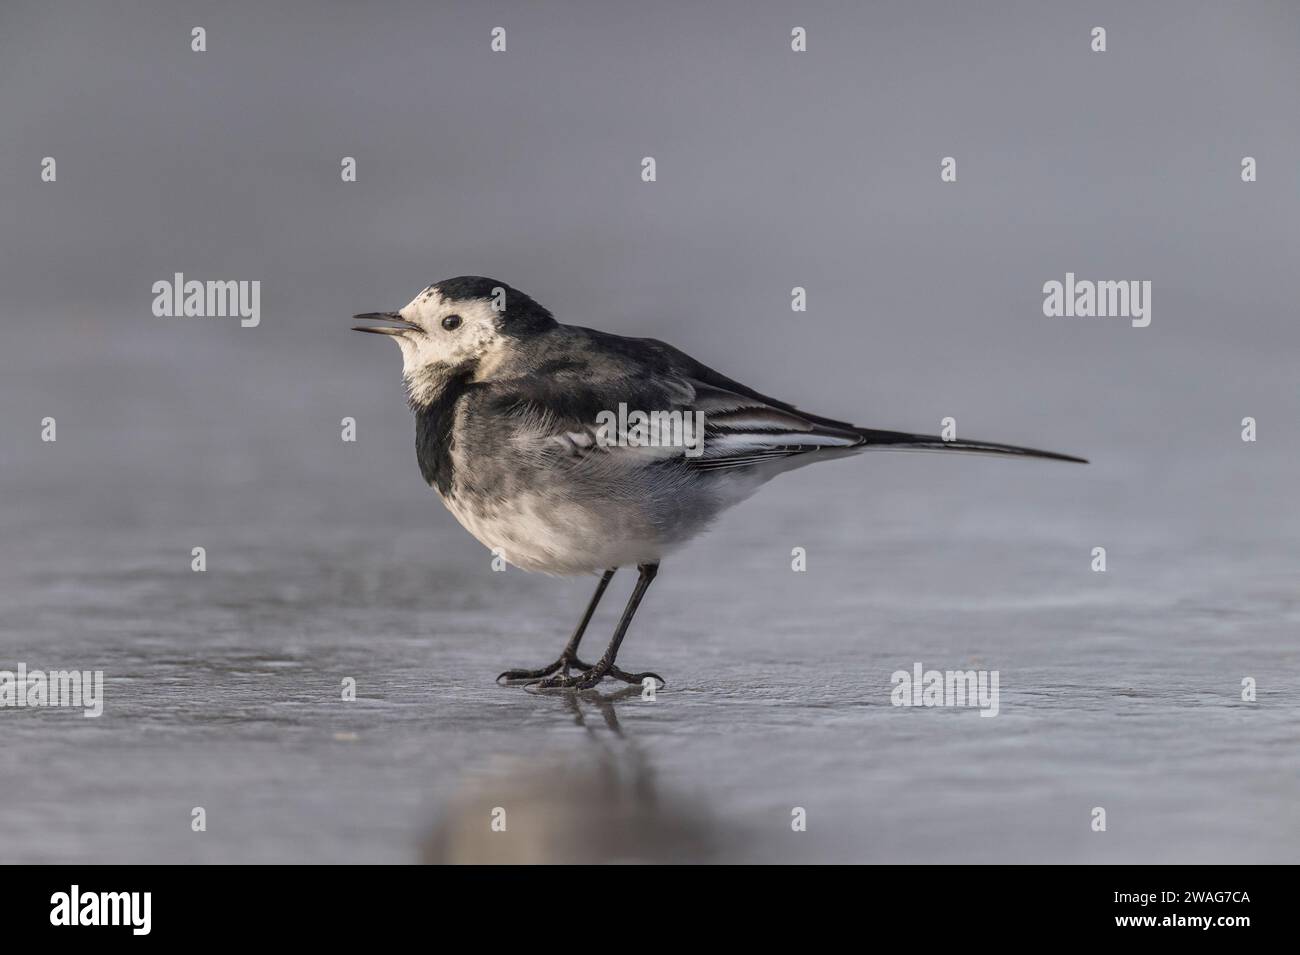 Pied wagtail, Motacilla alba standing on ice, tweeting Stock Photo